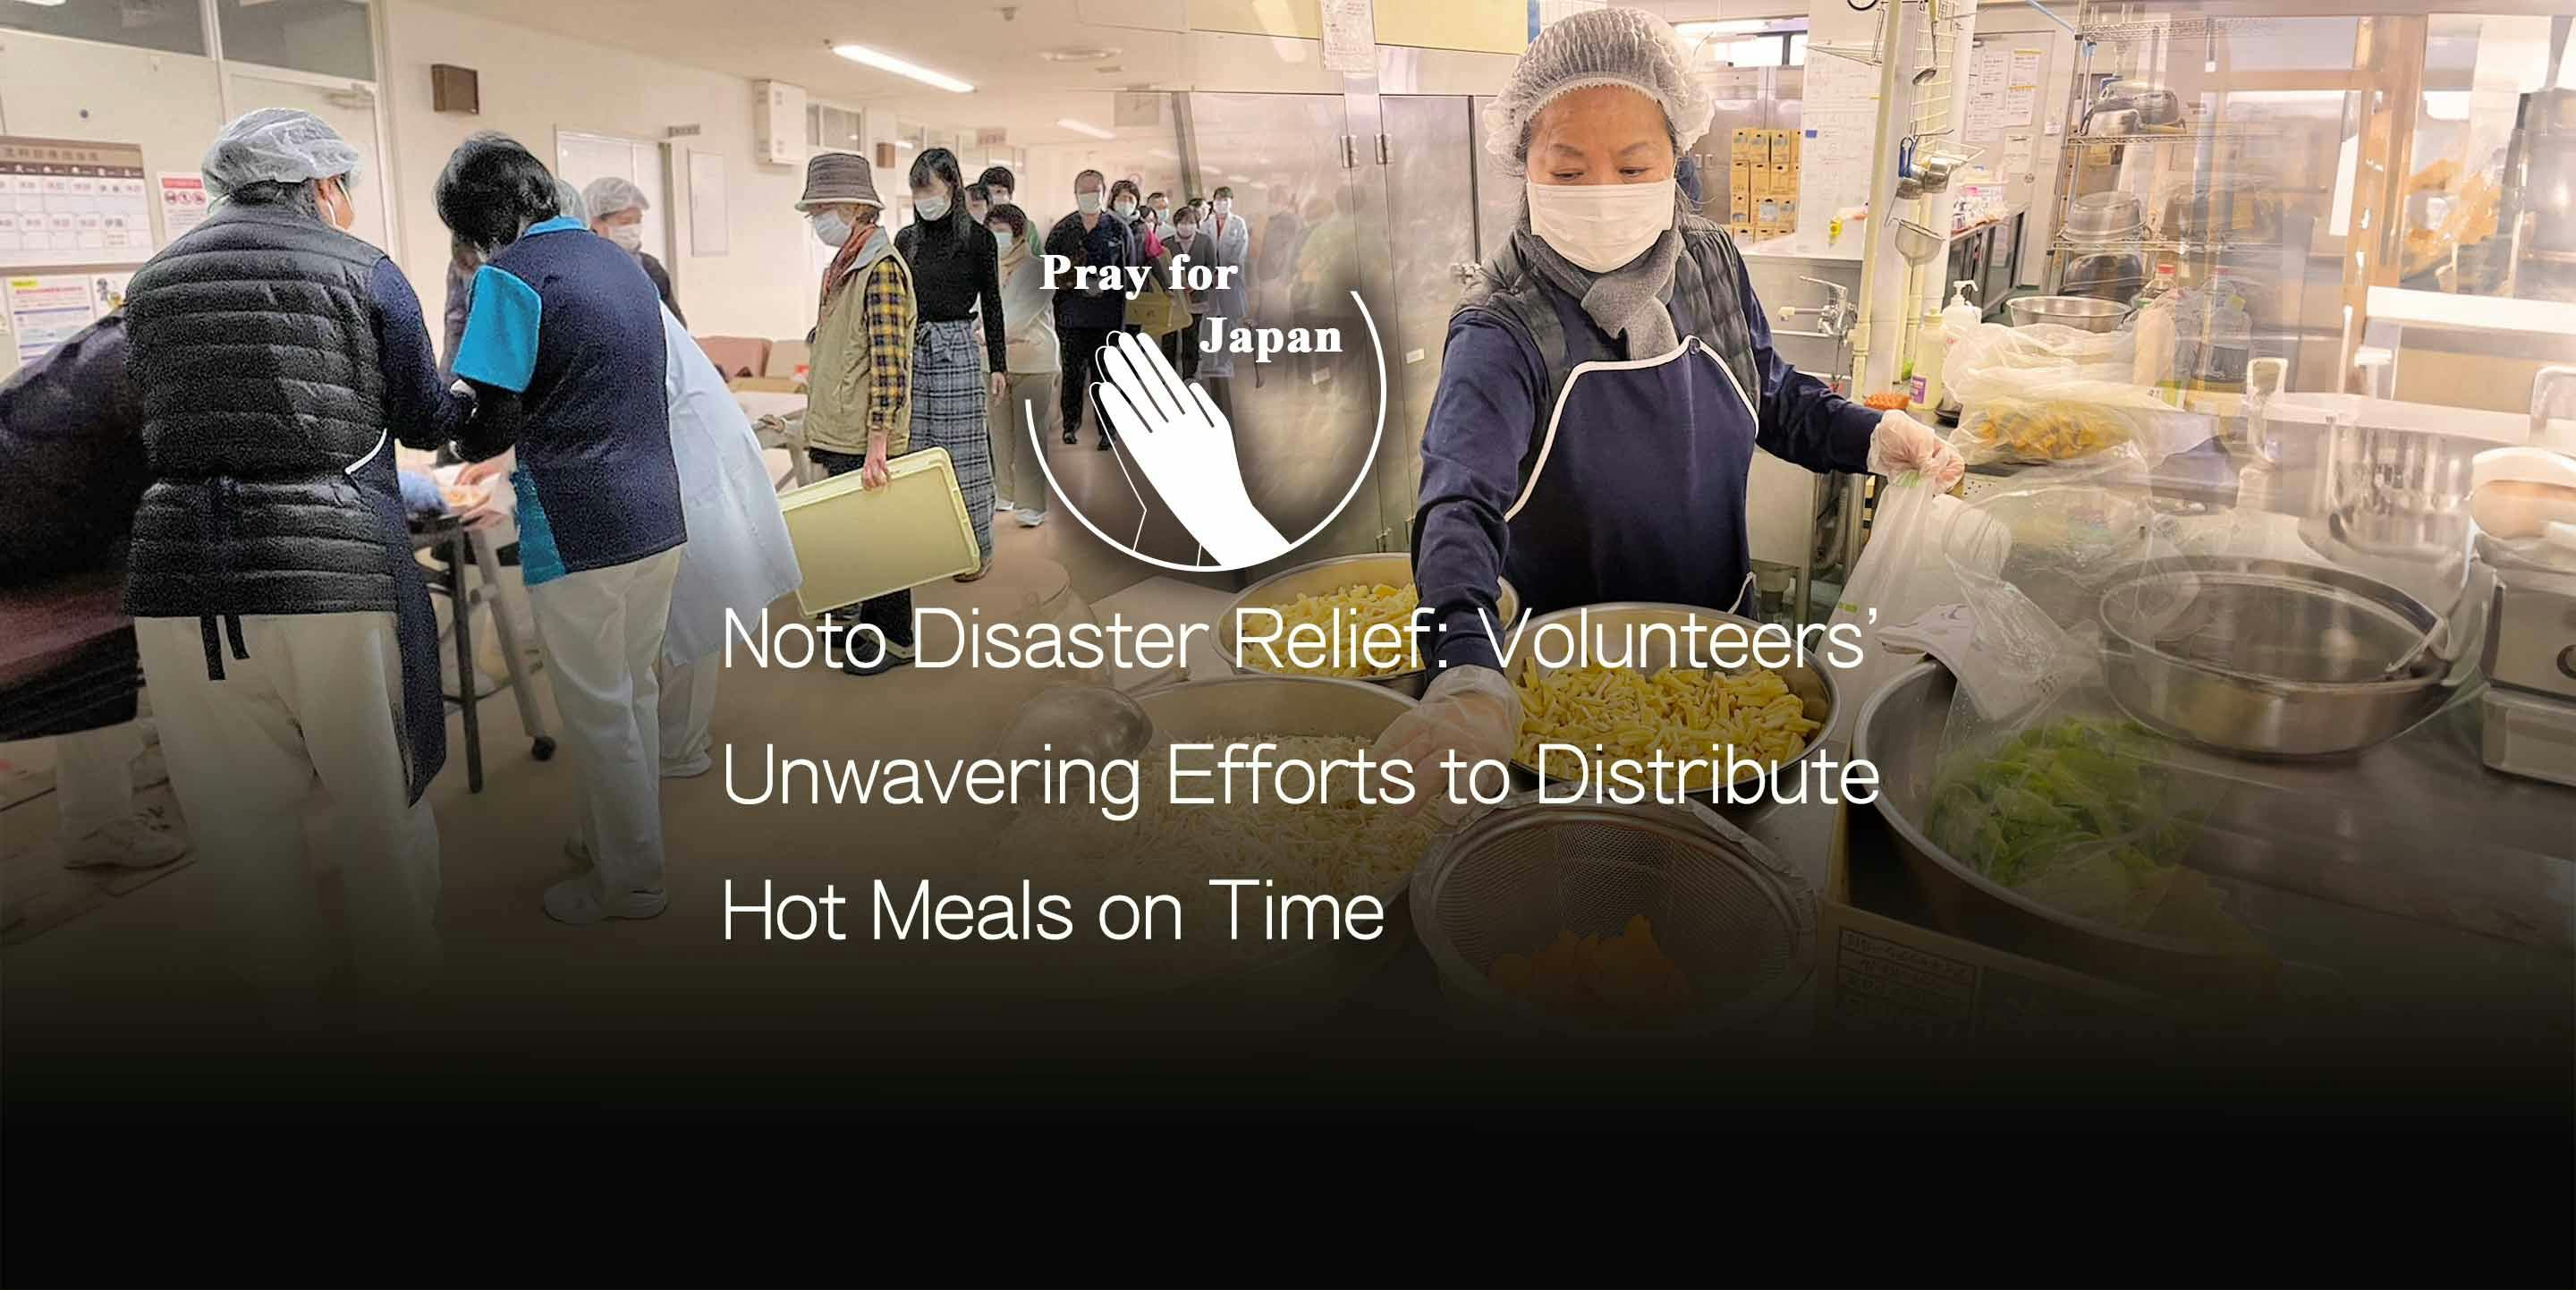 Noto Disaster Relief: Volunteers' Unwavering Efforts to Distribute Hot Meals on Time